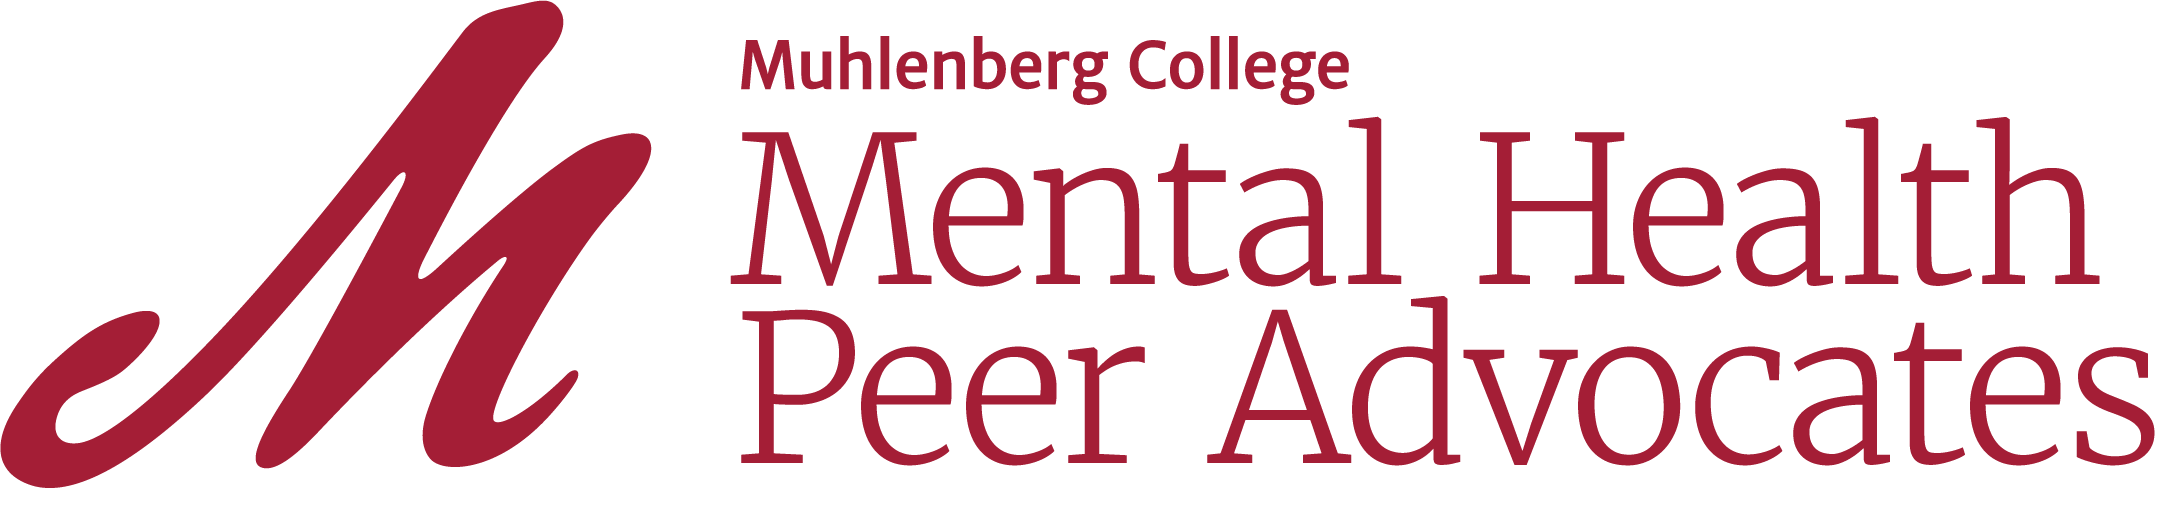 Muhlenberg school or department logo